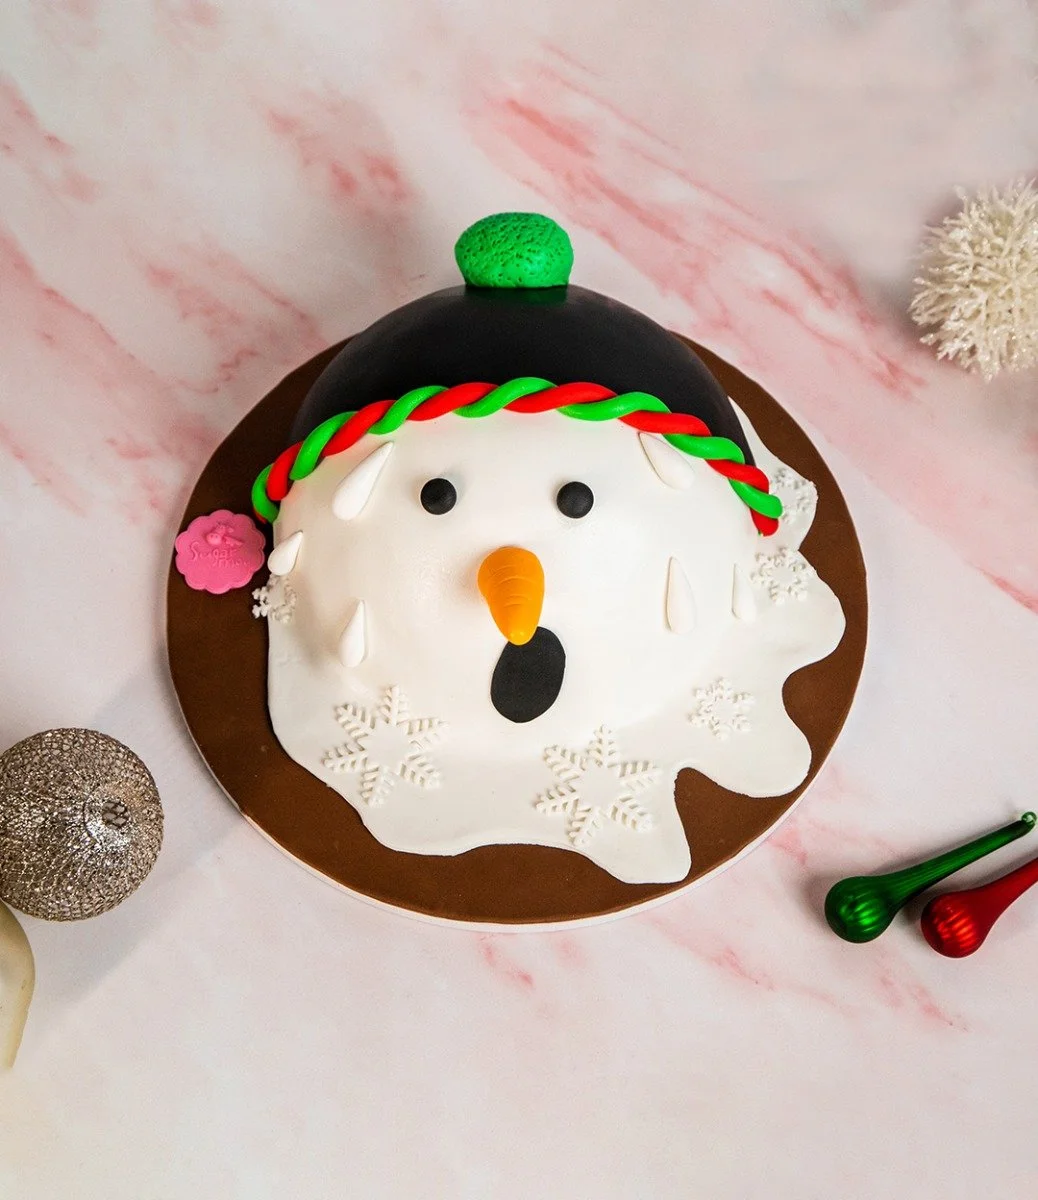 Melting Snowman Cake By Sugarmoo